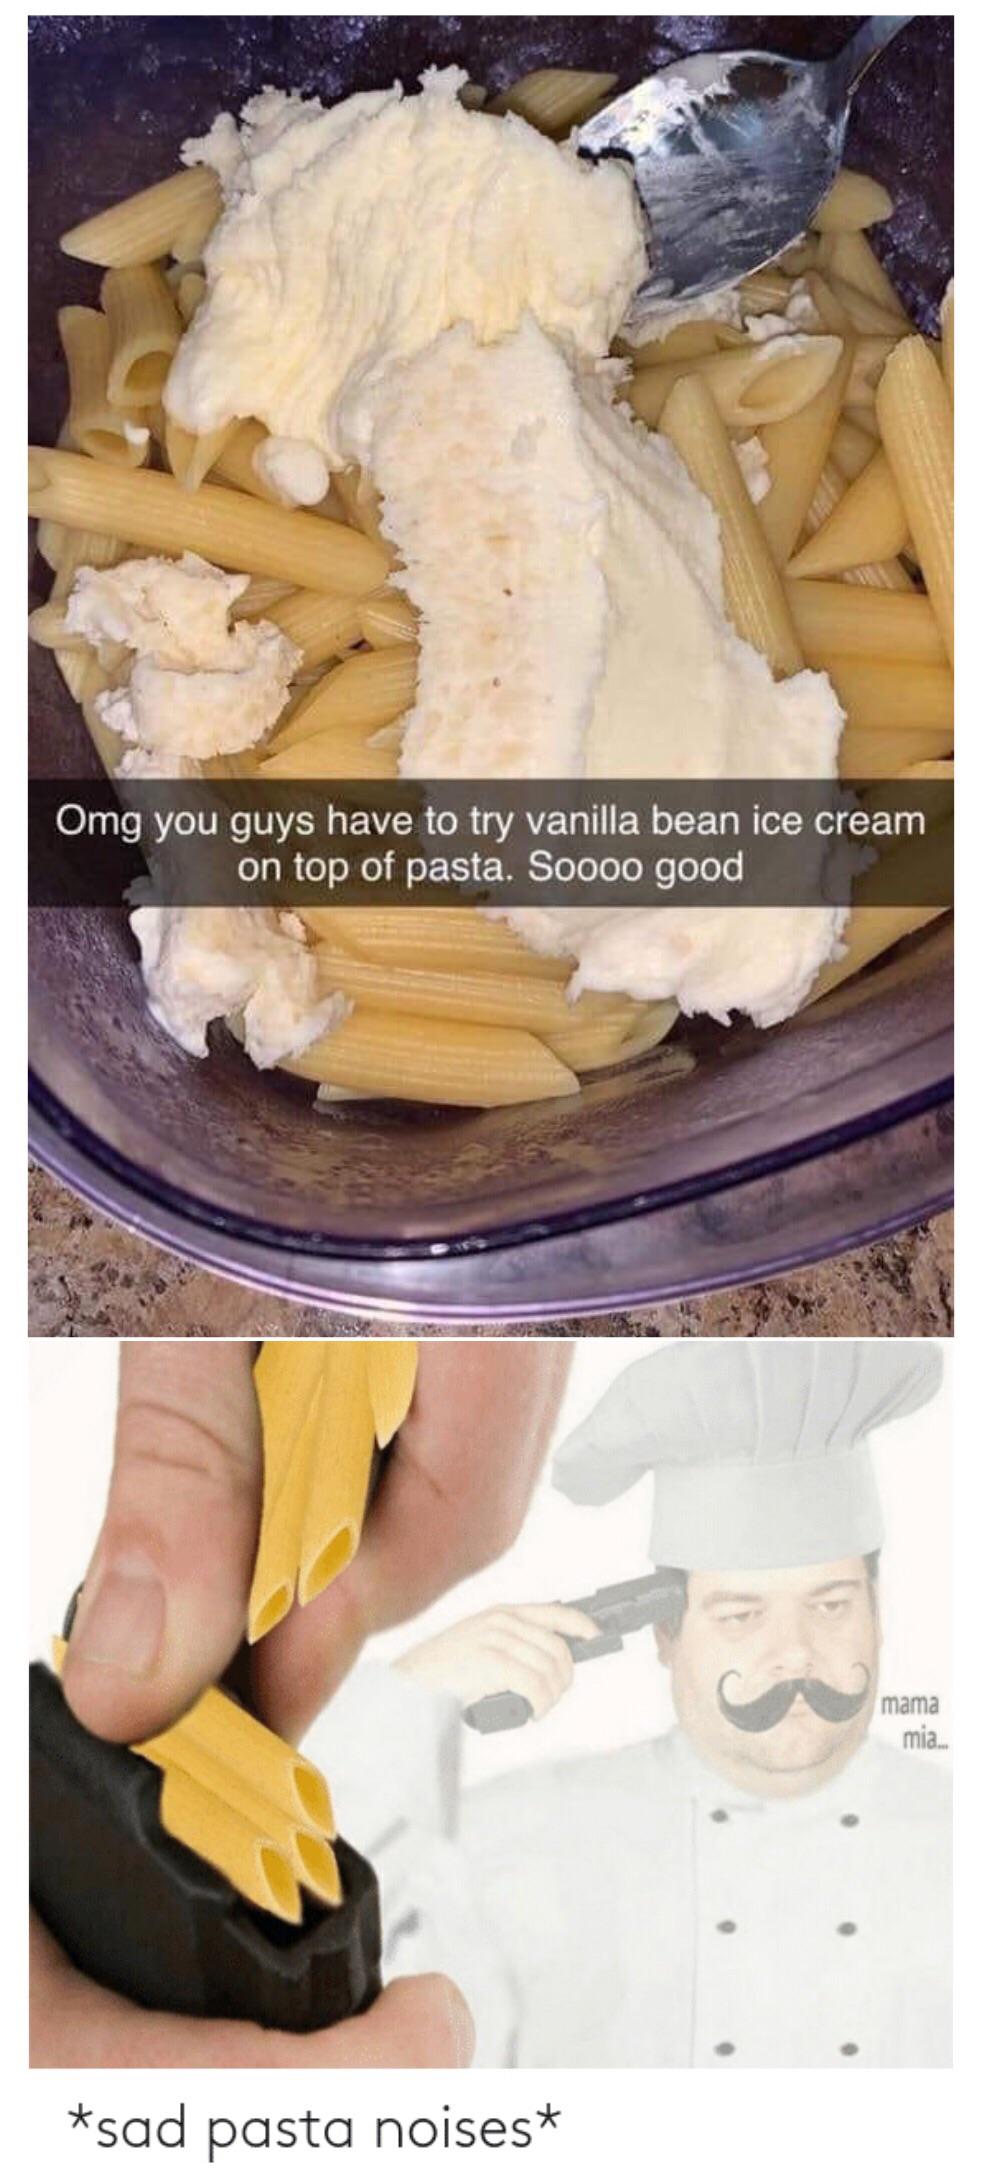 pasta la vista meme - Omg you guys have to try vanilla bean ice cream on top of pasta. Soooo good w mama mia. sad pasta noises